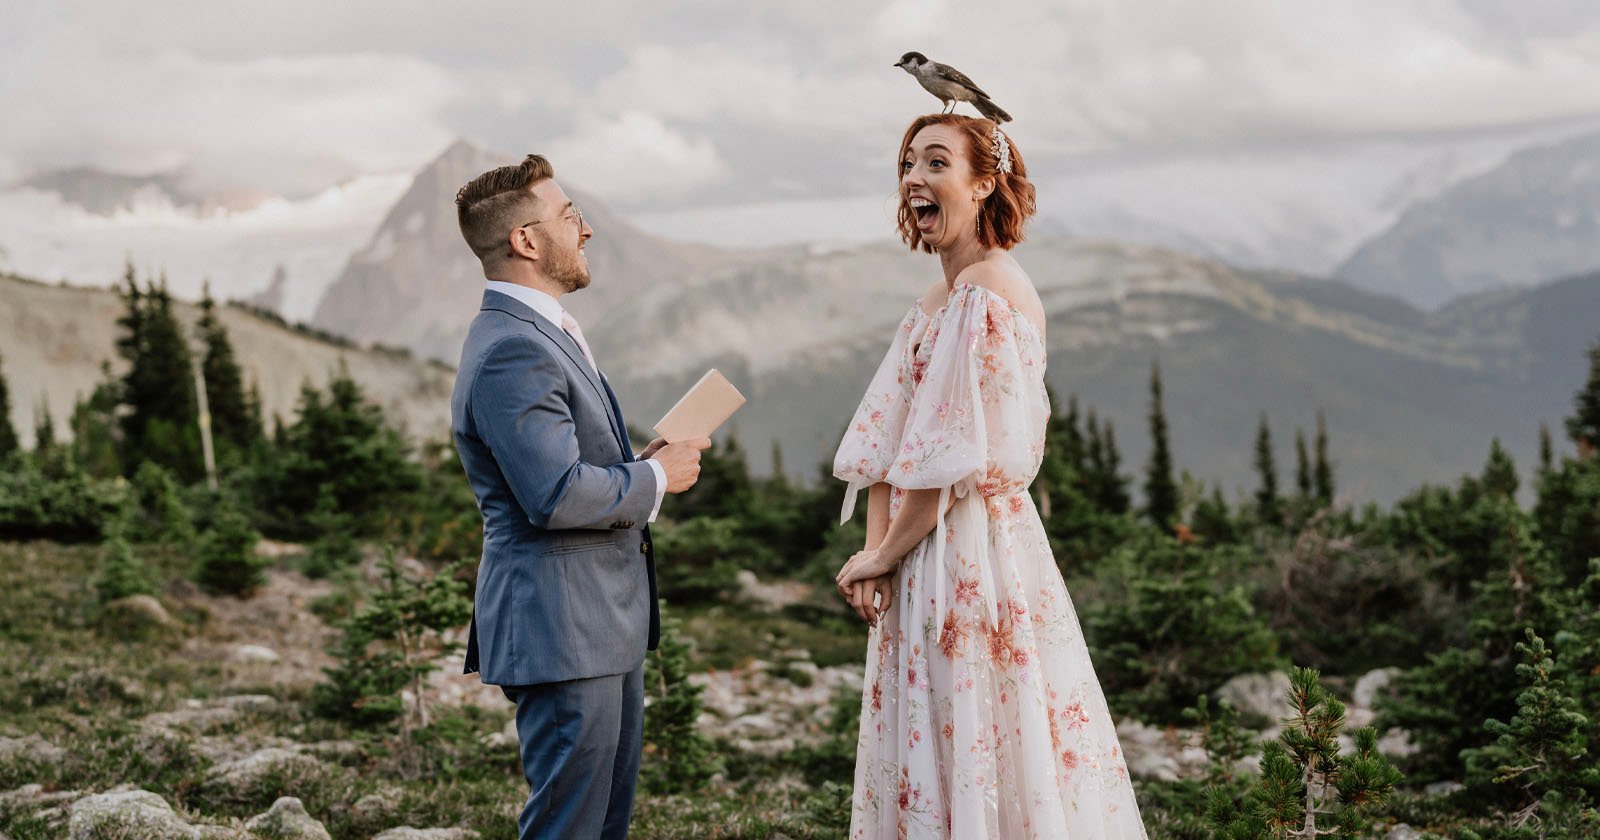 Bird Landing on Brides Head During Vows Wins International Photo Award